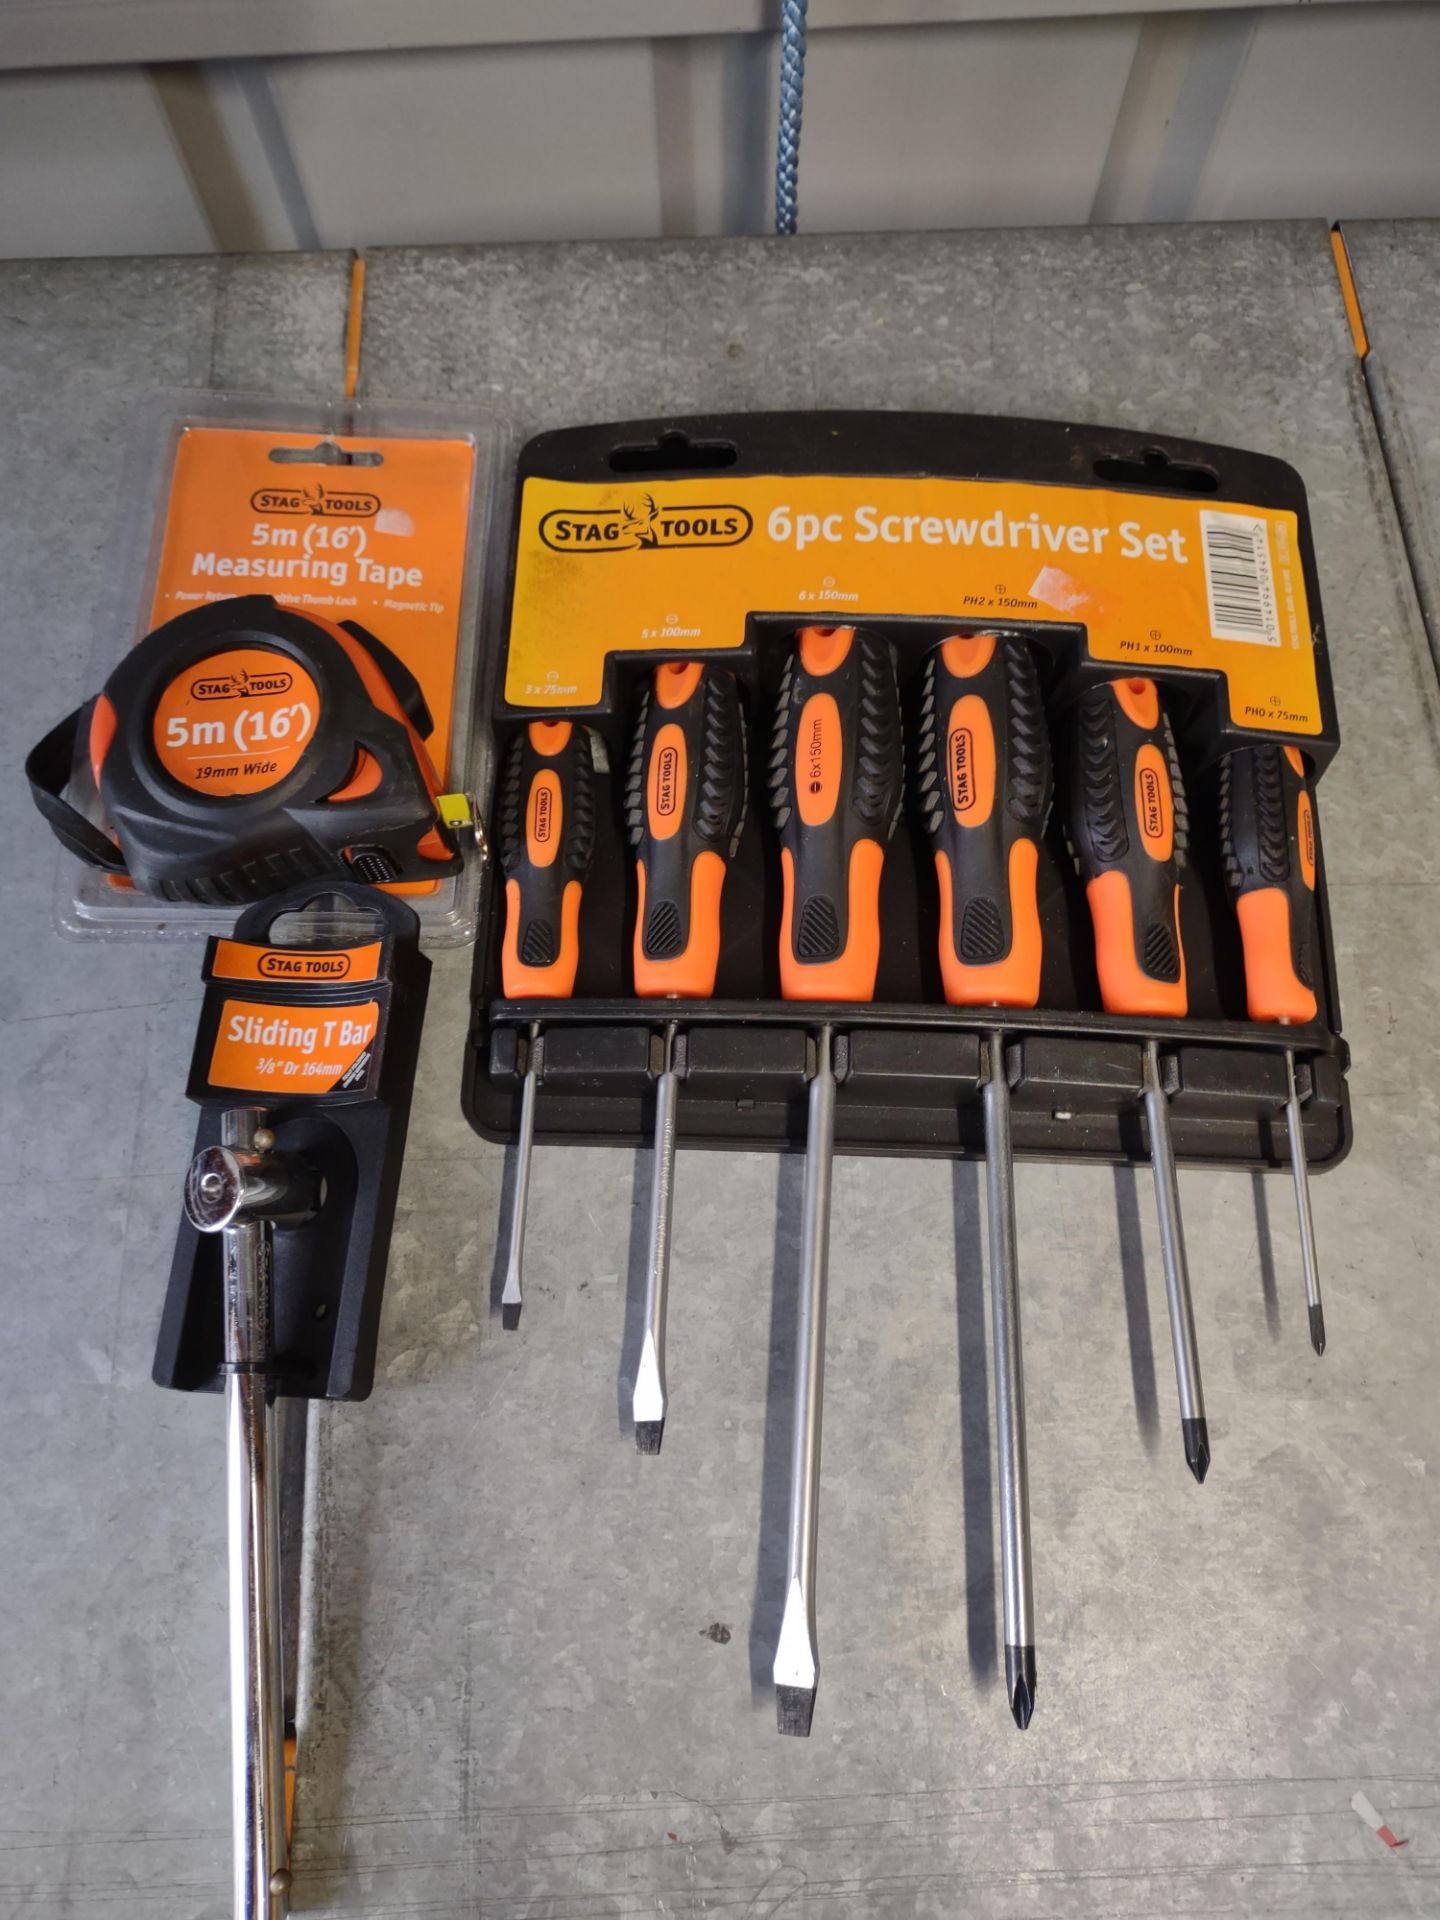 Stag Tools 6 piece screw driver set, sliding T bar, 5m tape measure. RRP £30. Grade A.